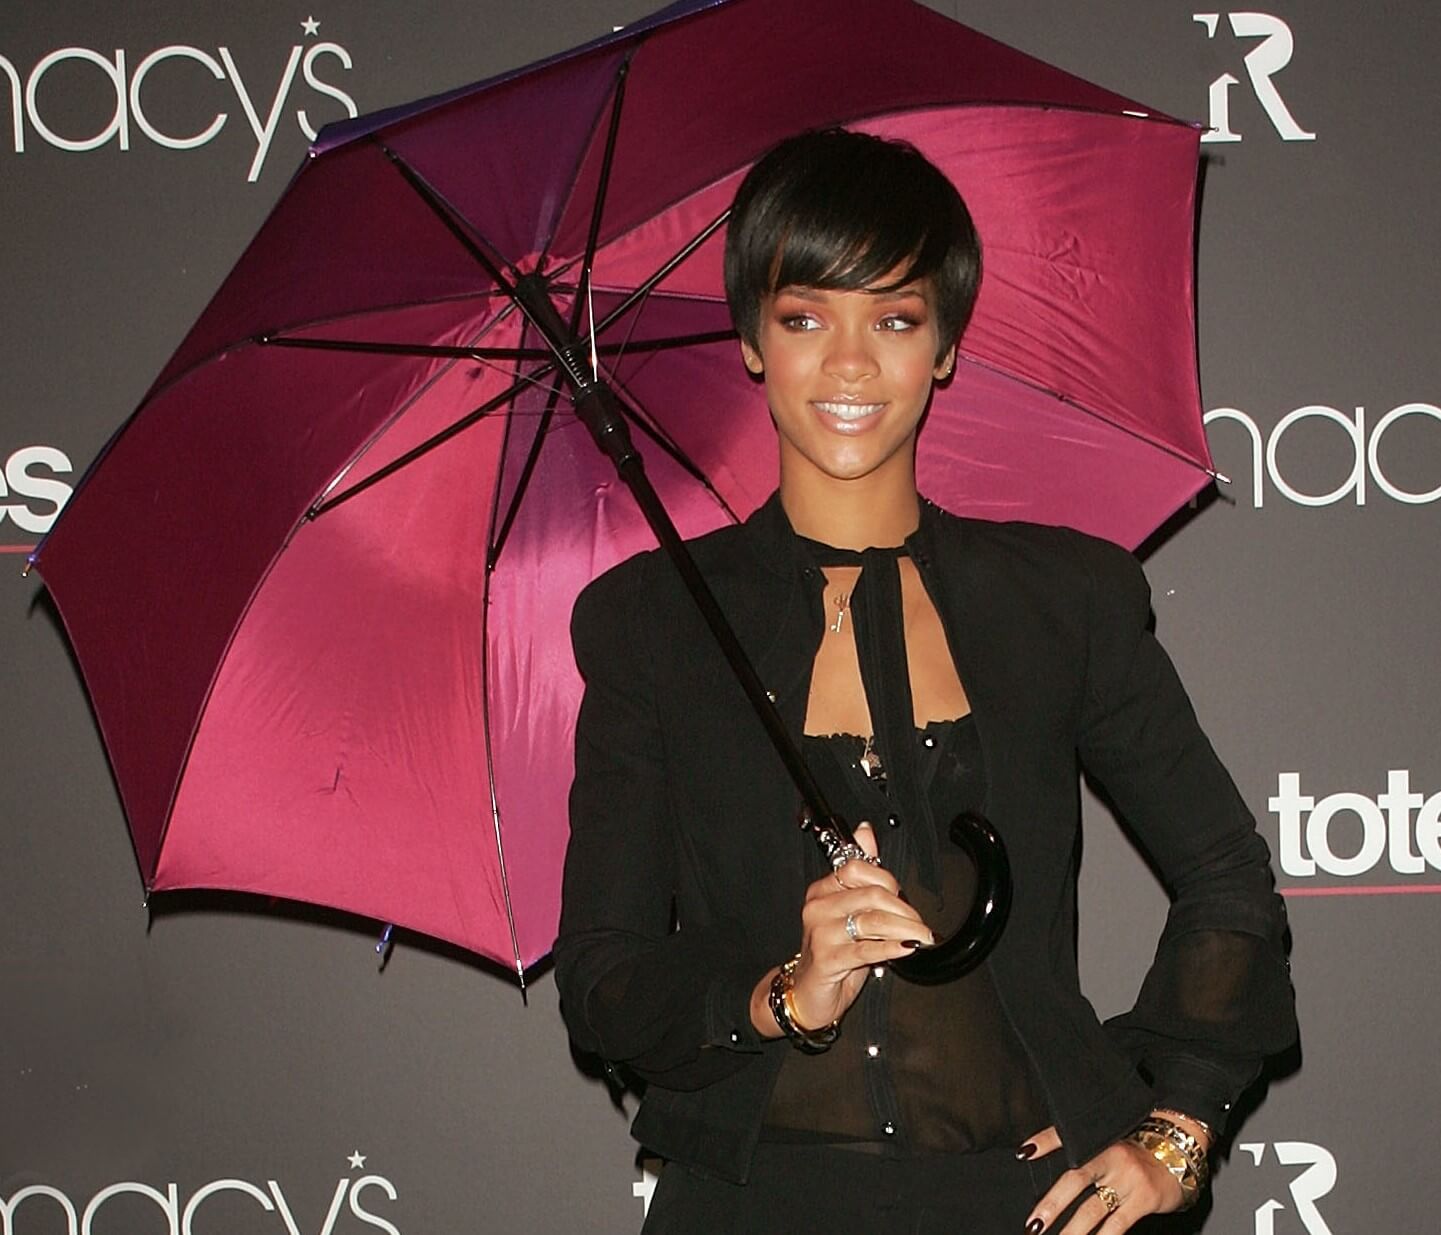 "Umbrella" singer Rihanna with an umbrella